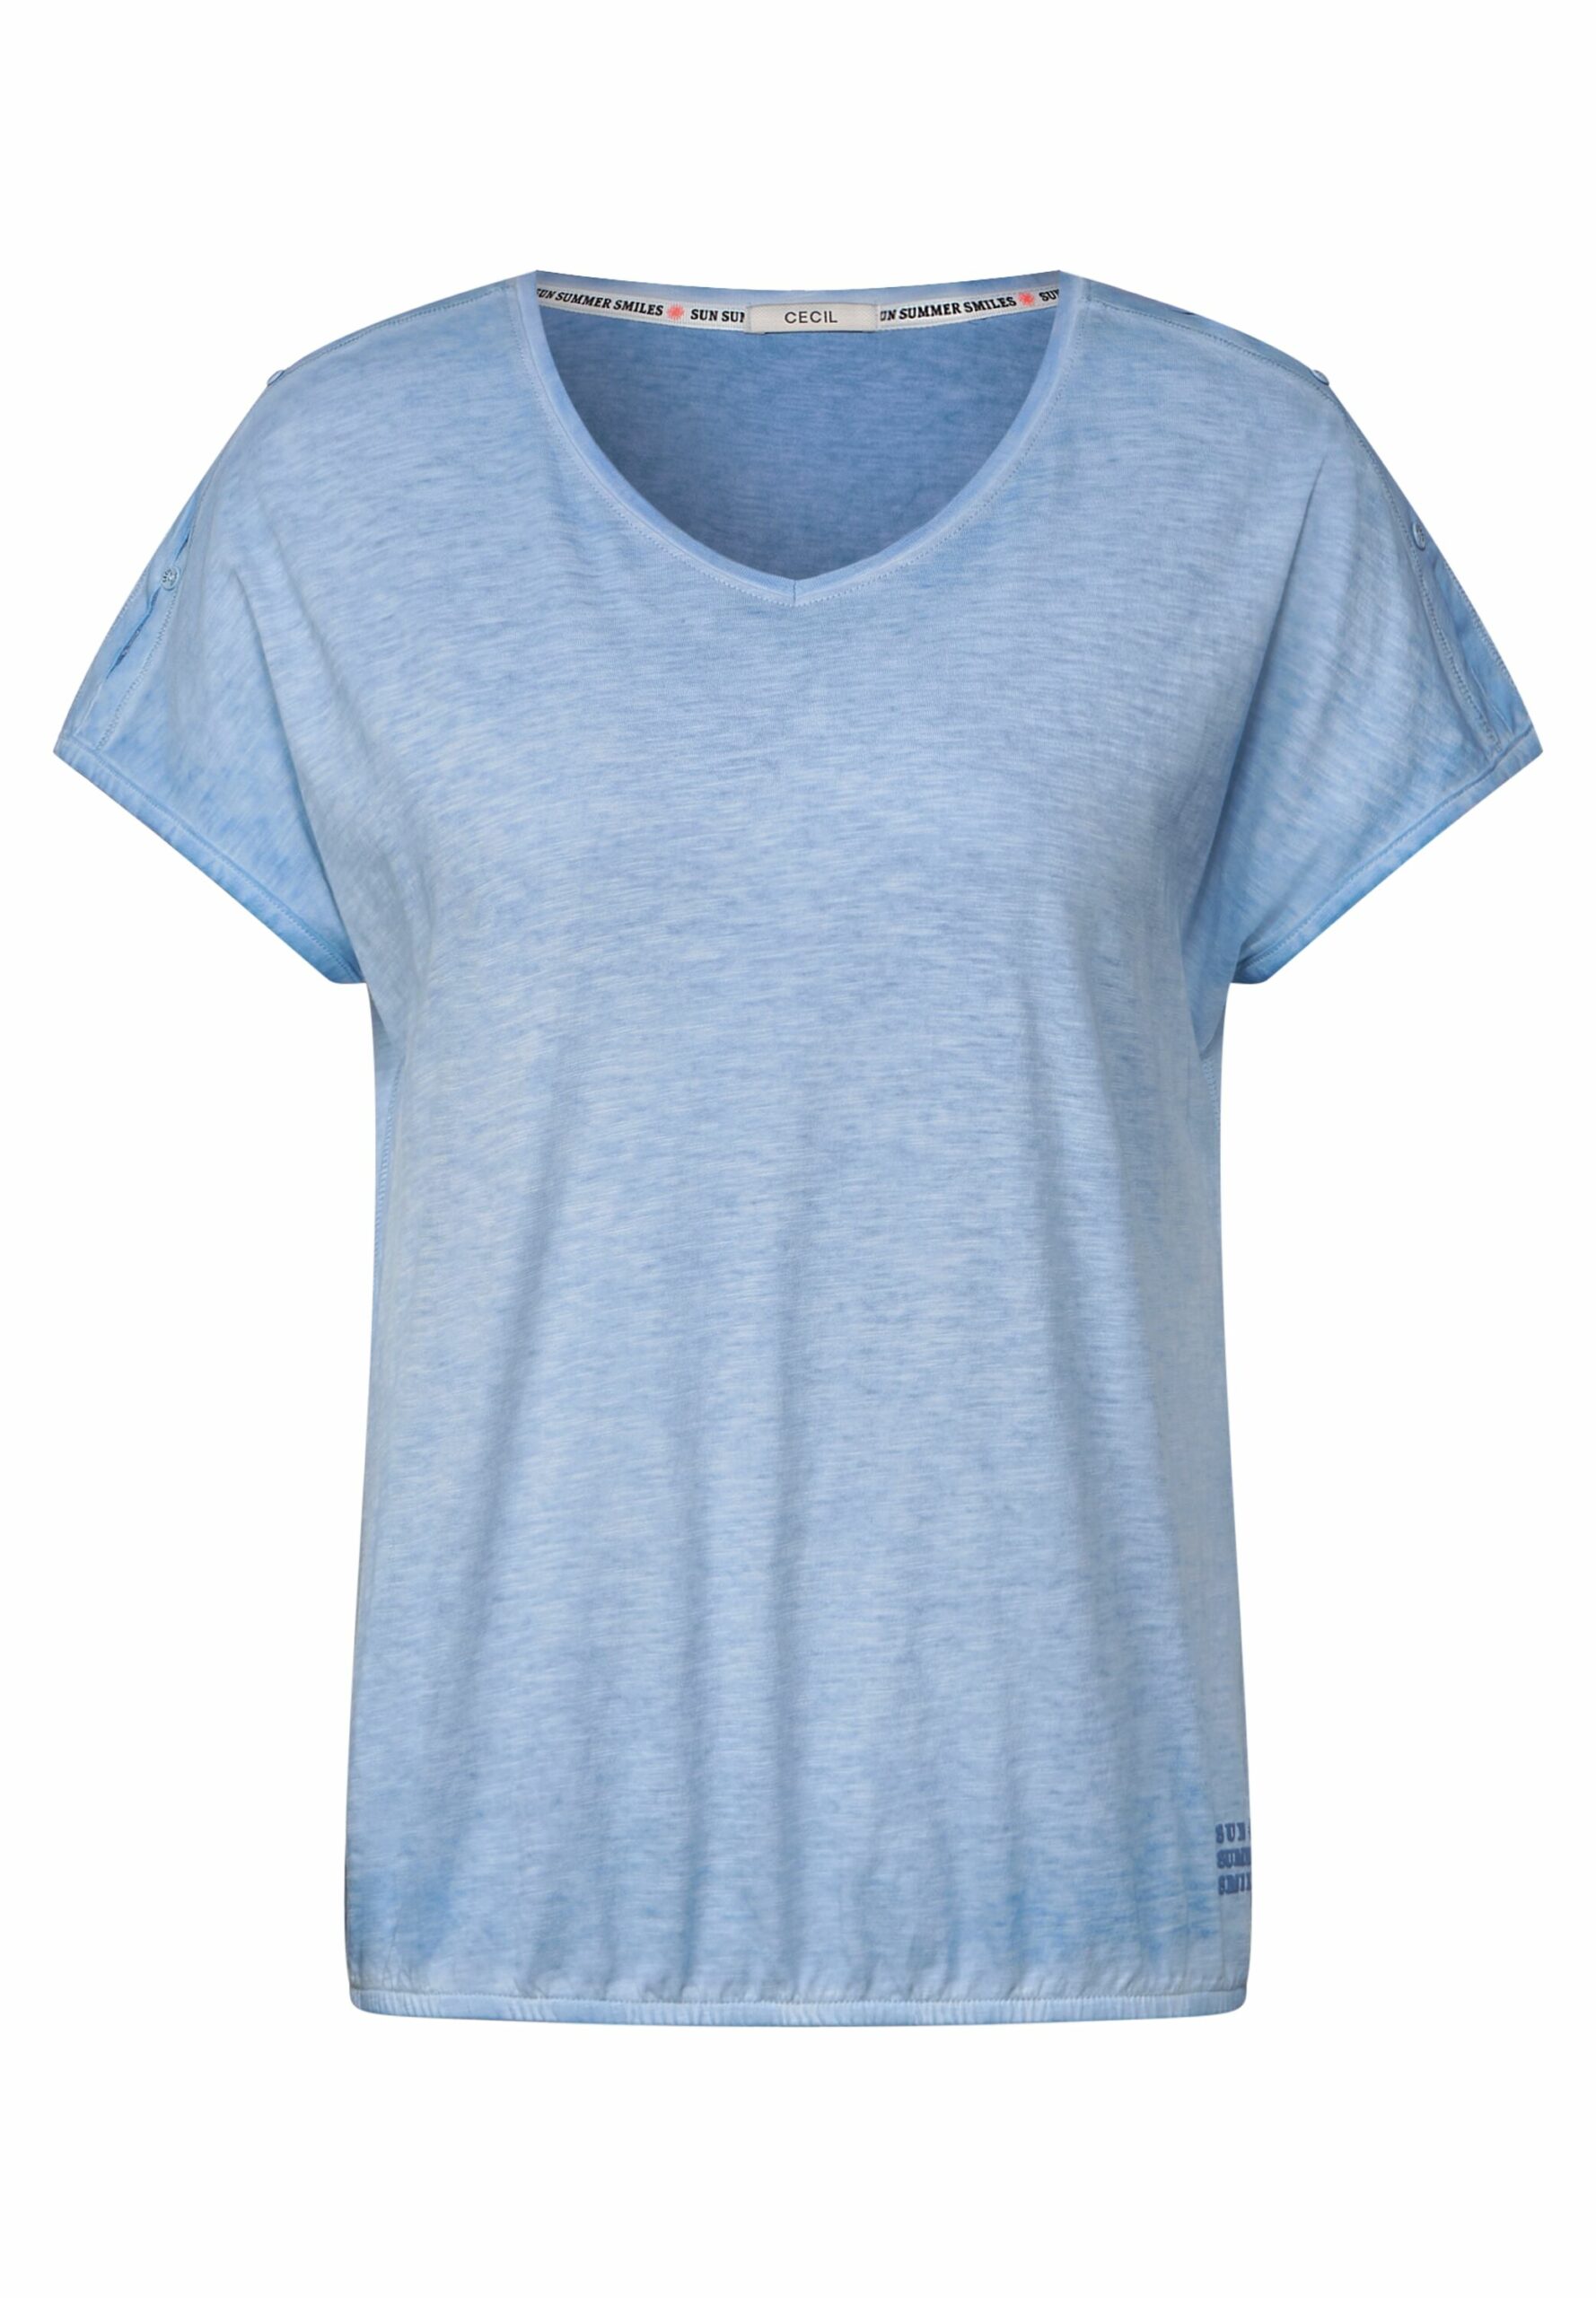 CECIL Damen - Kamlage Modehaus Webshop T-Shirt